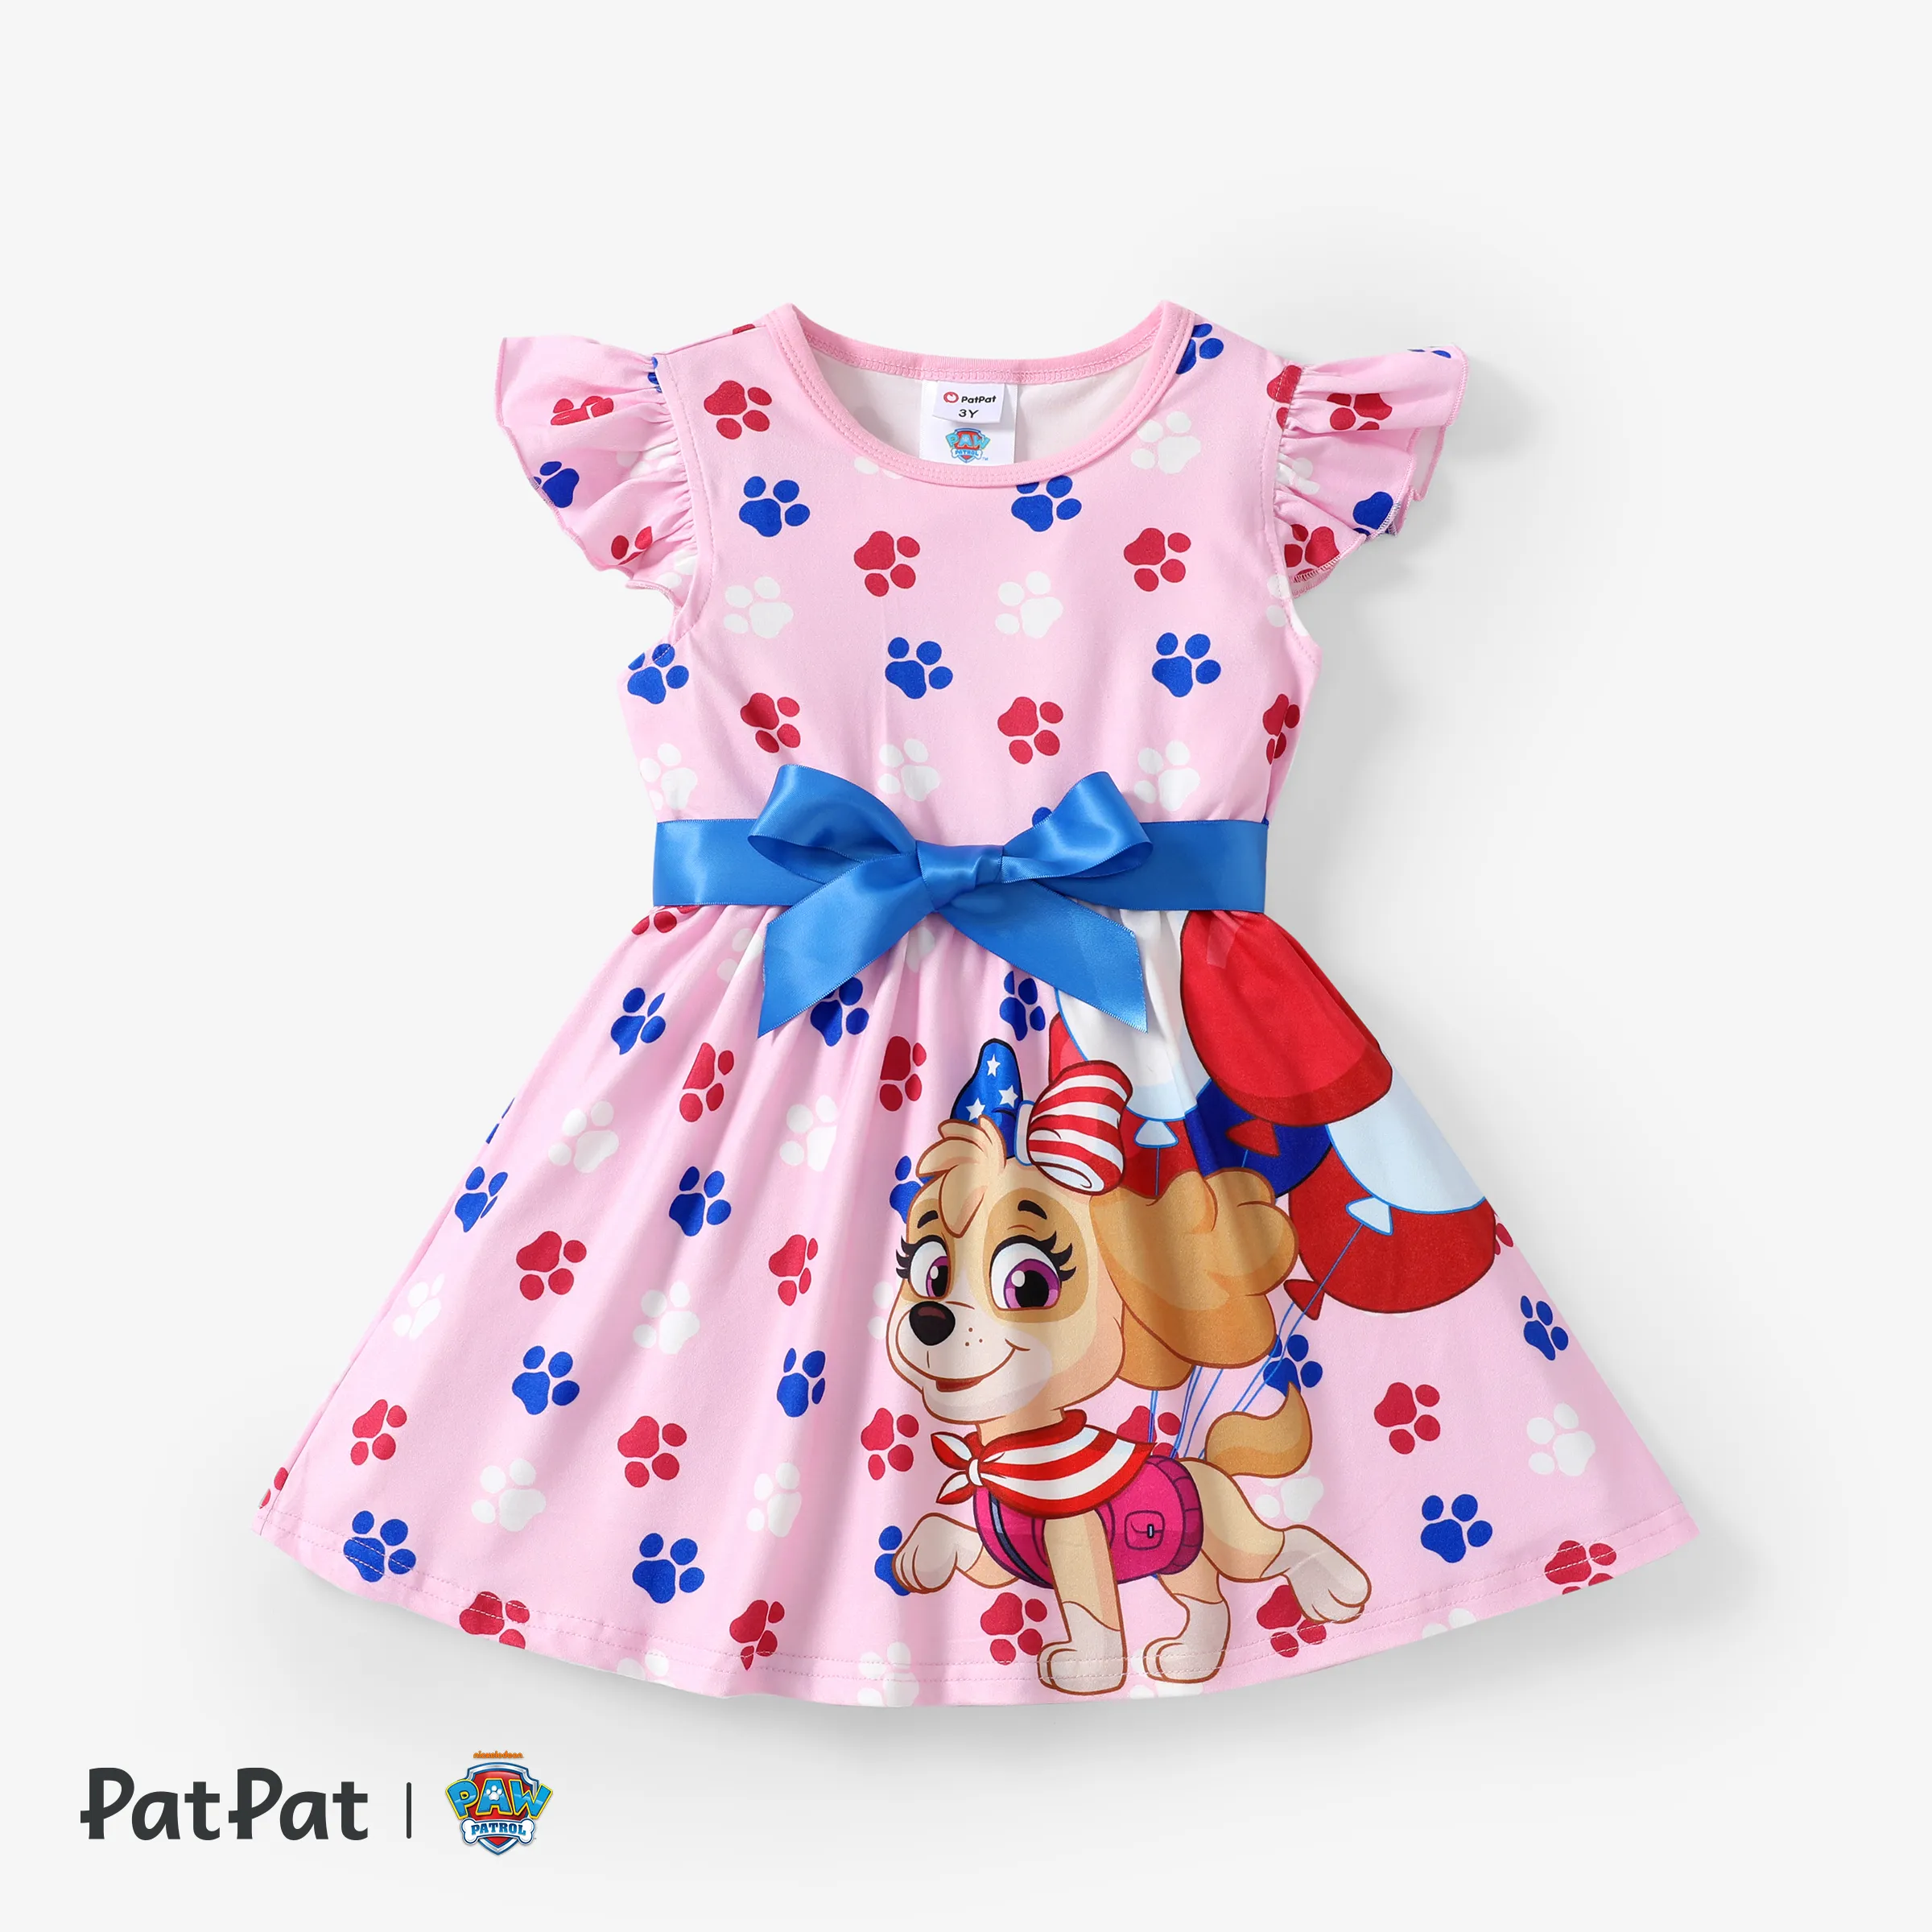 PAW Patrol Toddler Girl Bowknot and Heart Print Tank Dress